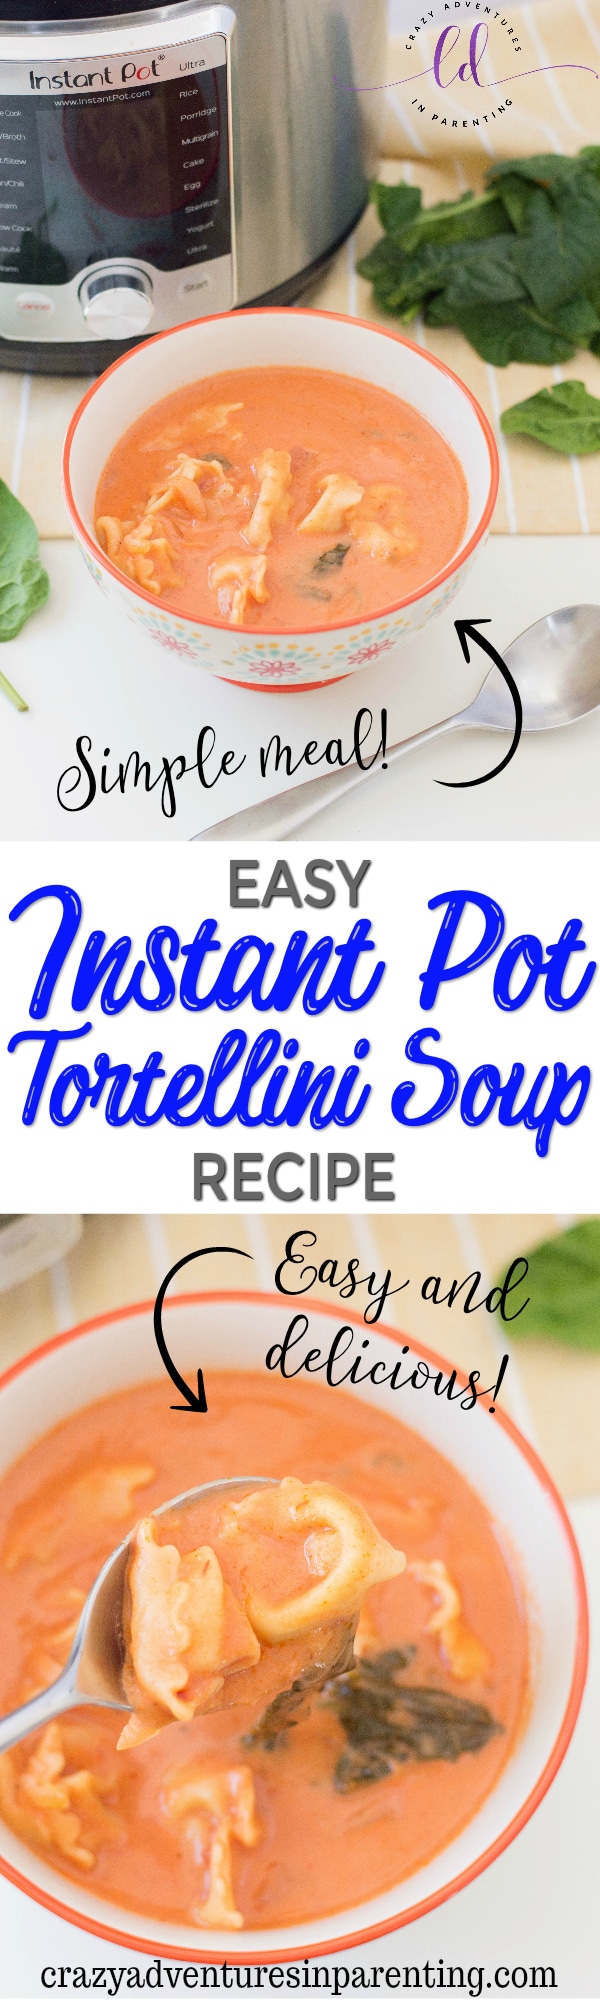 Easy Instant Pot Tortellini Soup Recipe